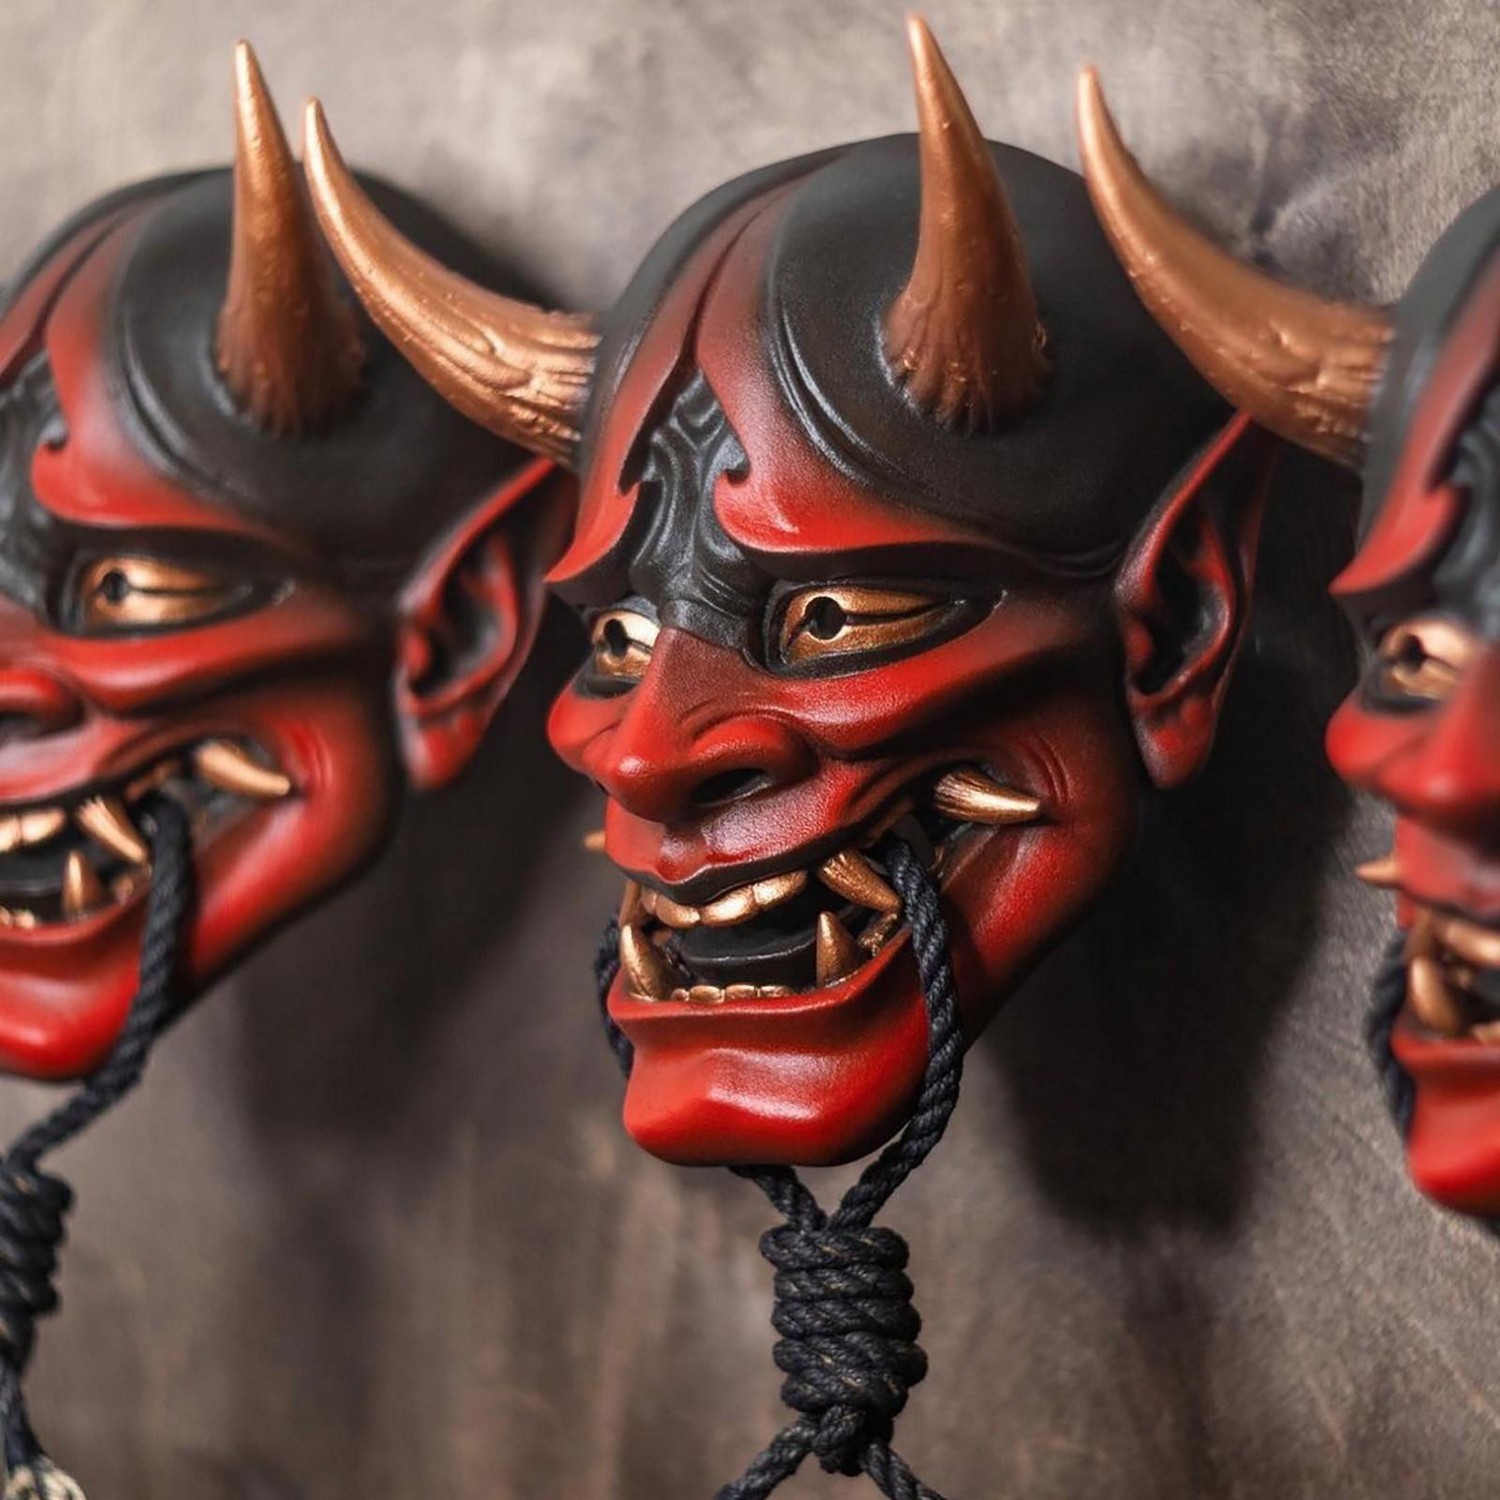 máscara de cabeça de demônio para Halloween - motivo japonês